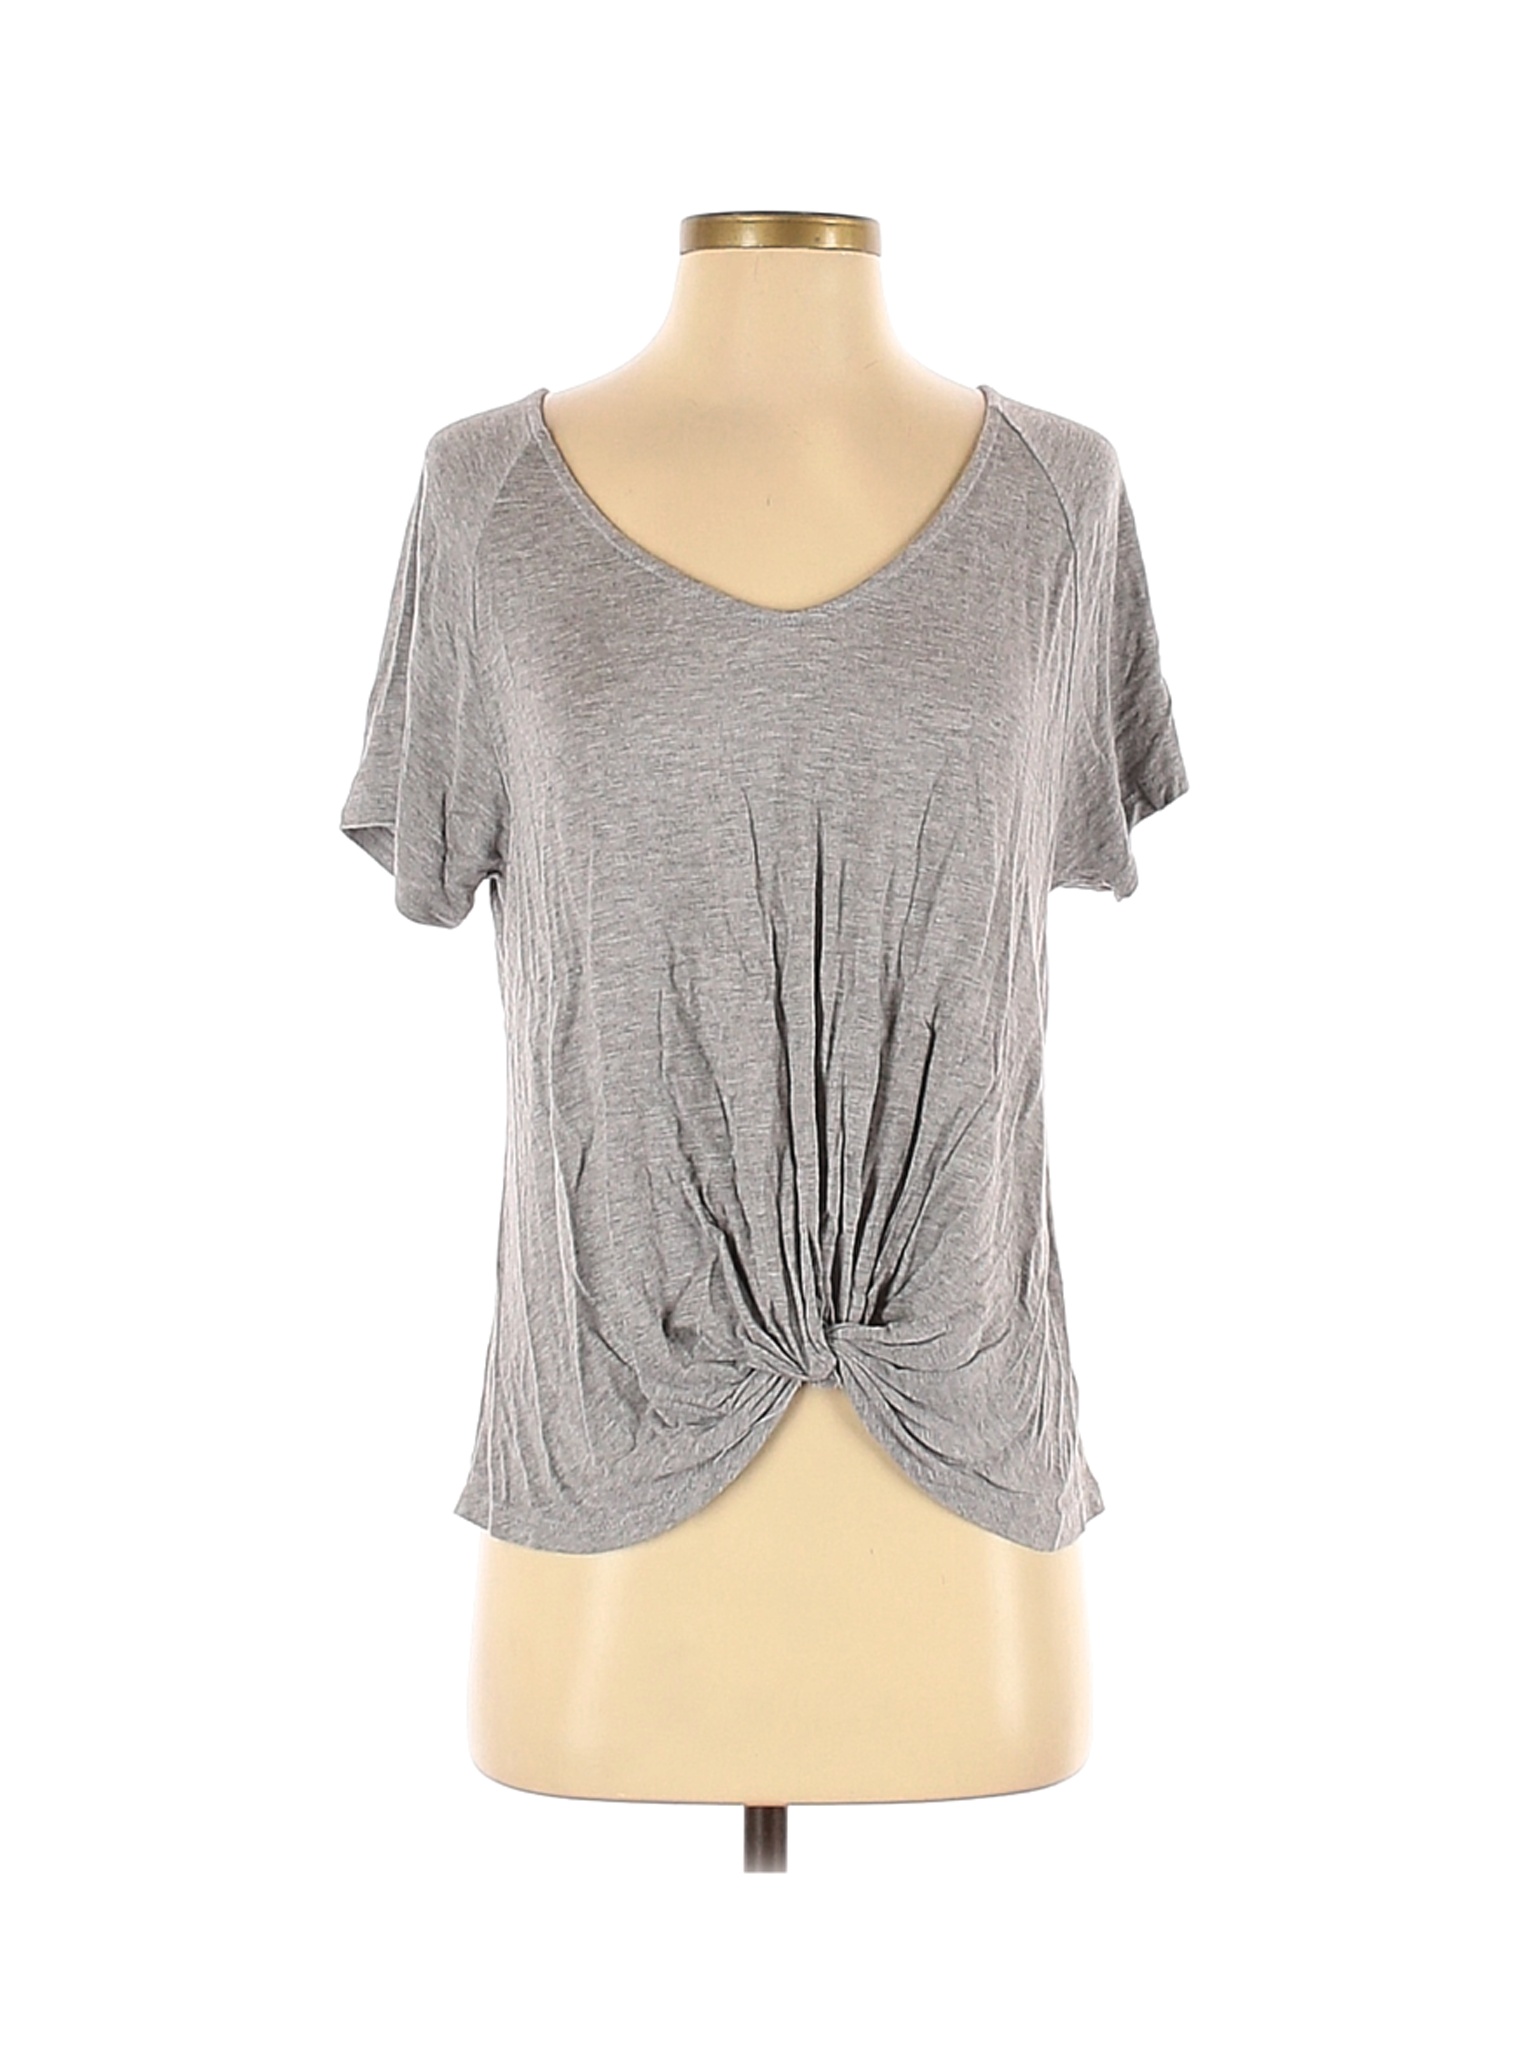 Wasabi + mint Women Gray Short Sleeve T-Shirt S | eBay